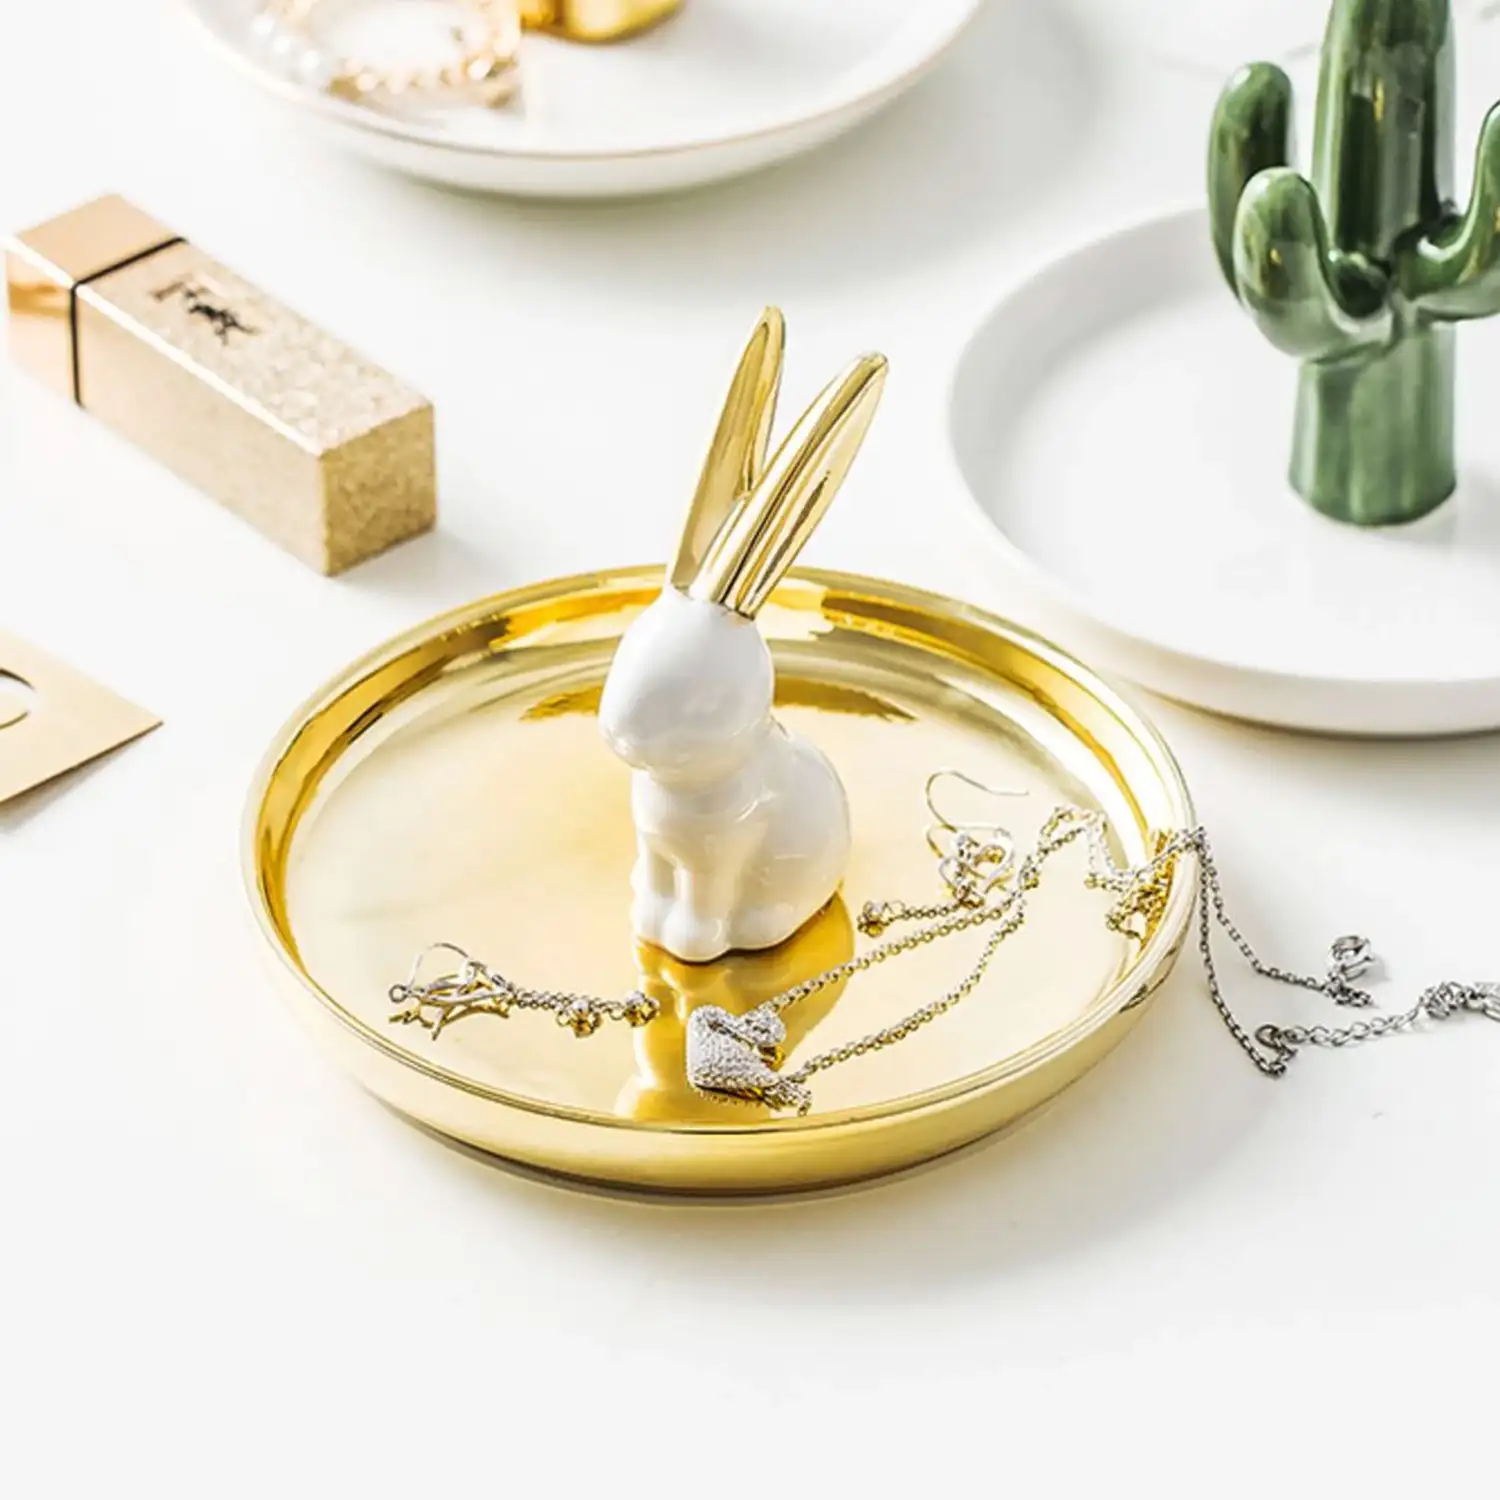 Figura decorativa de porcelana conejo sobre plato